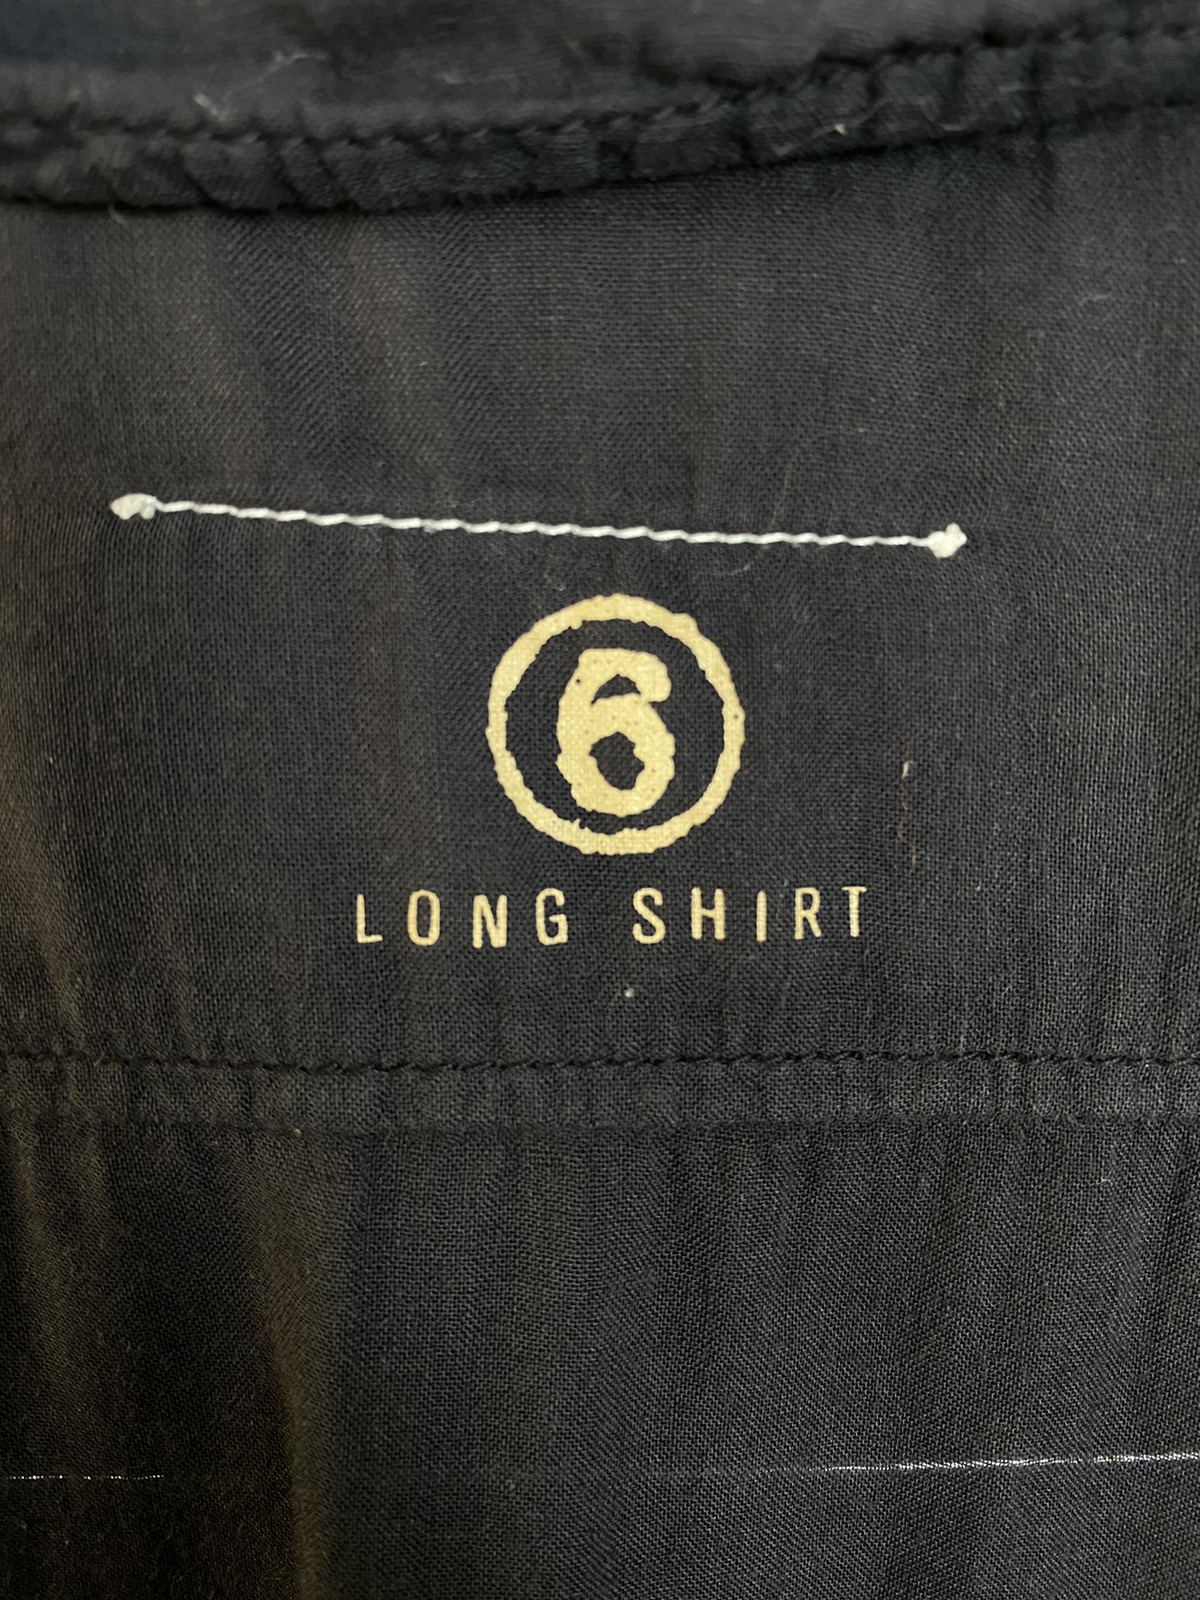 Vintage Maison Margiela Long Shirt - 3